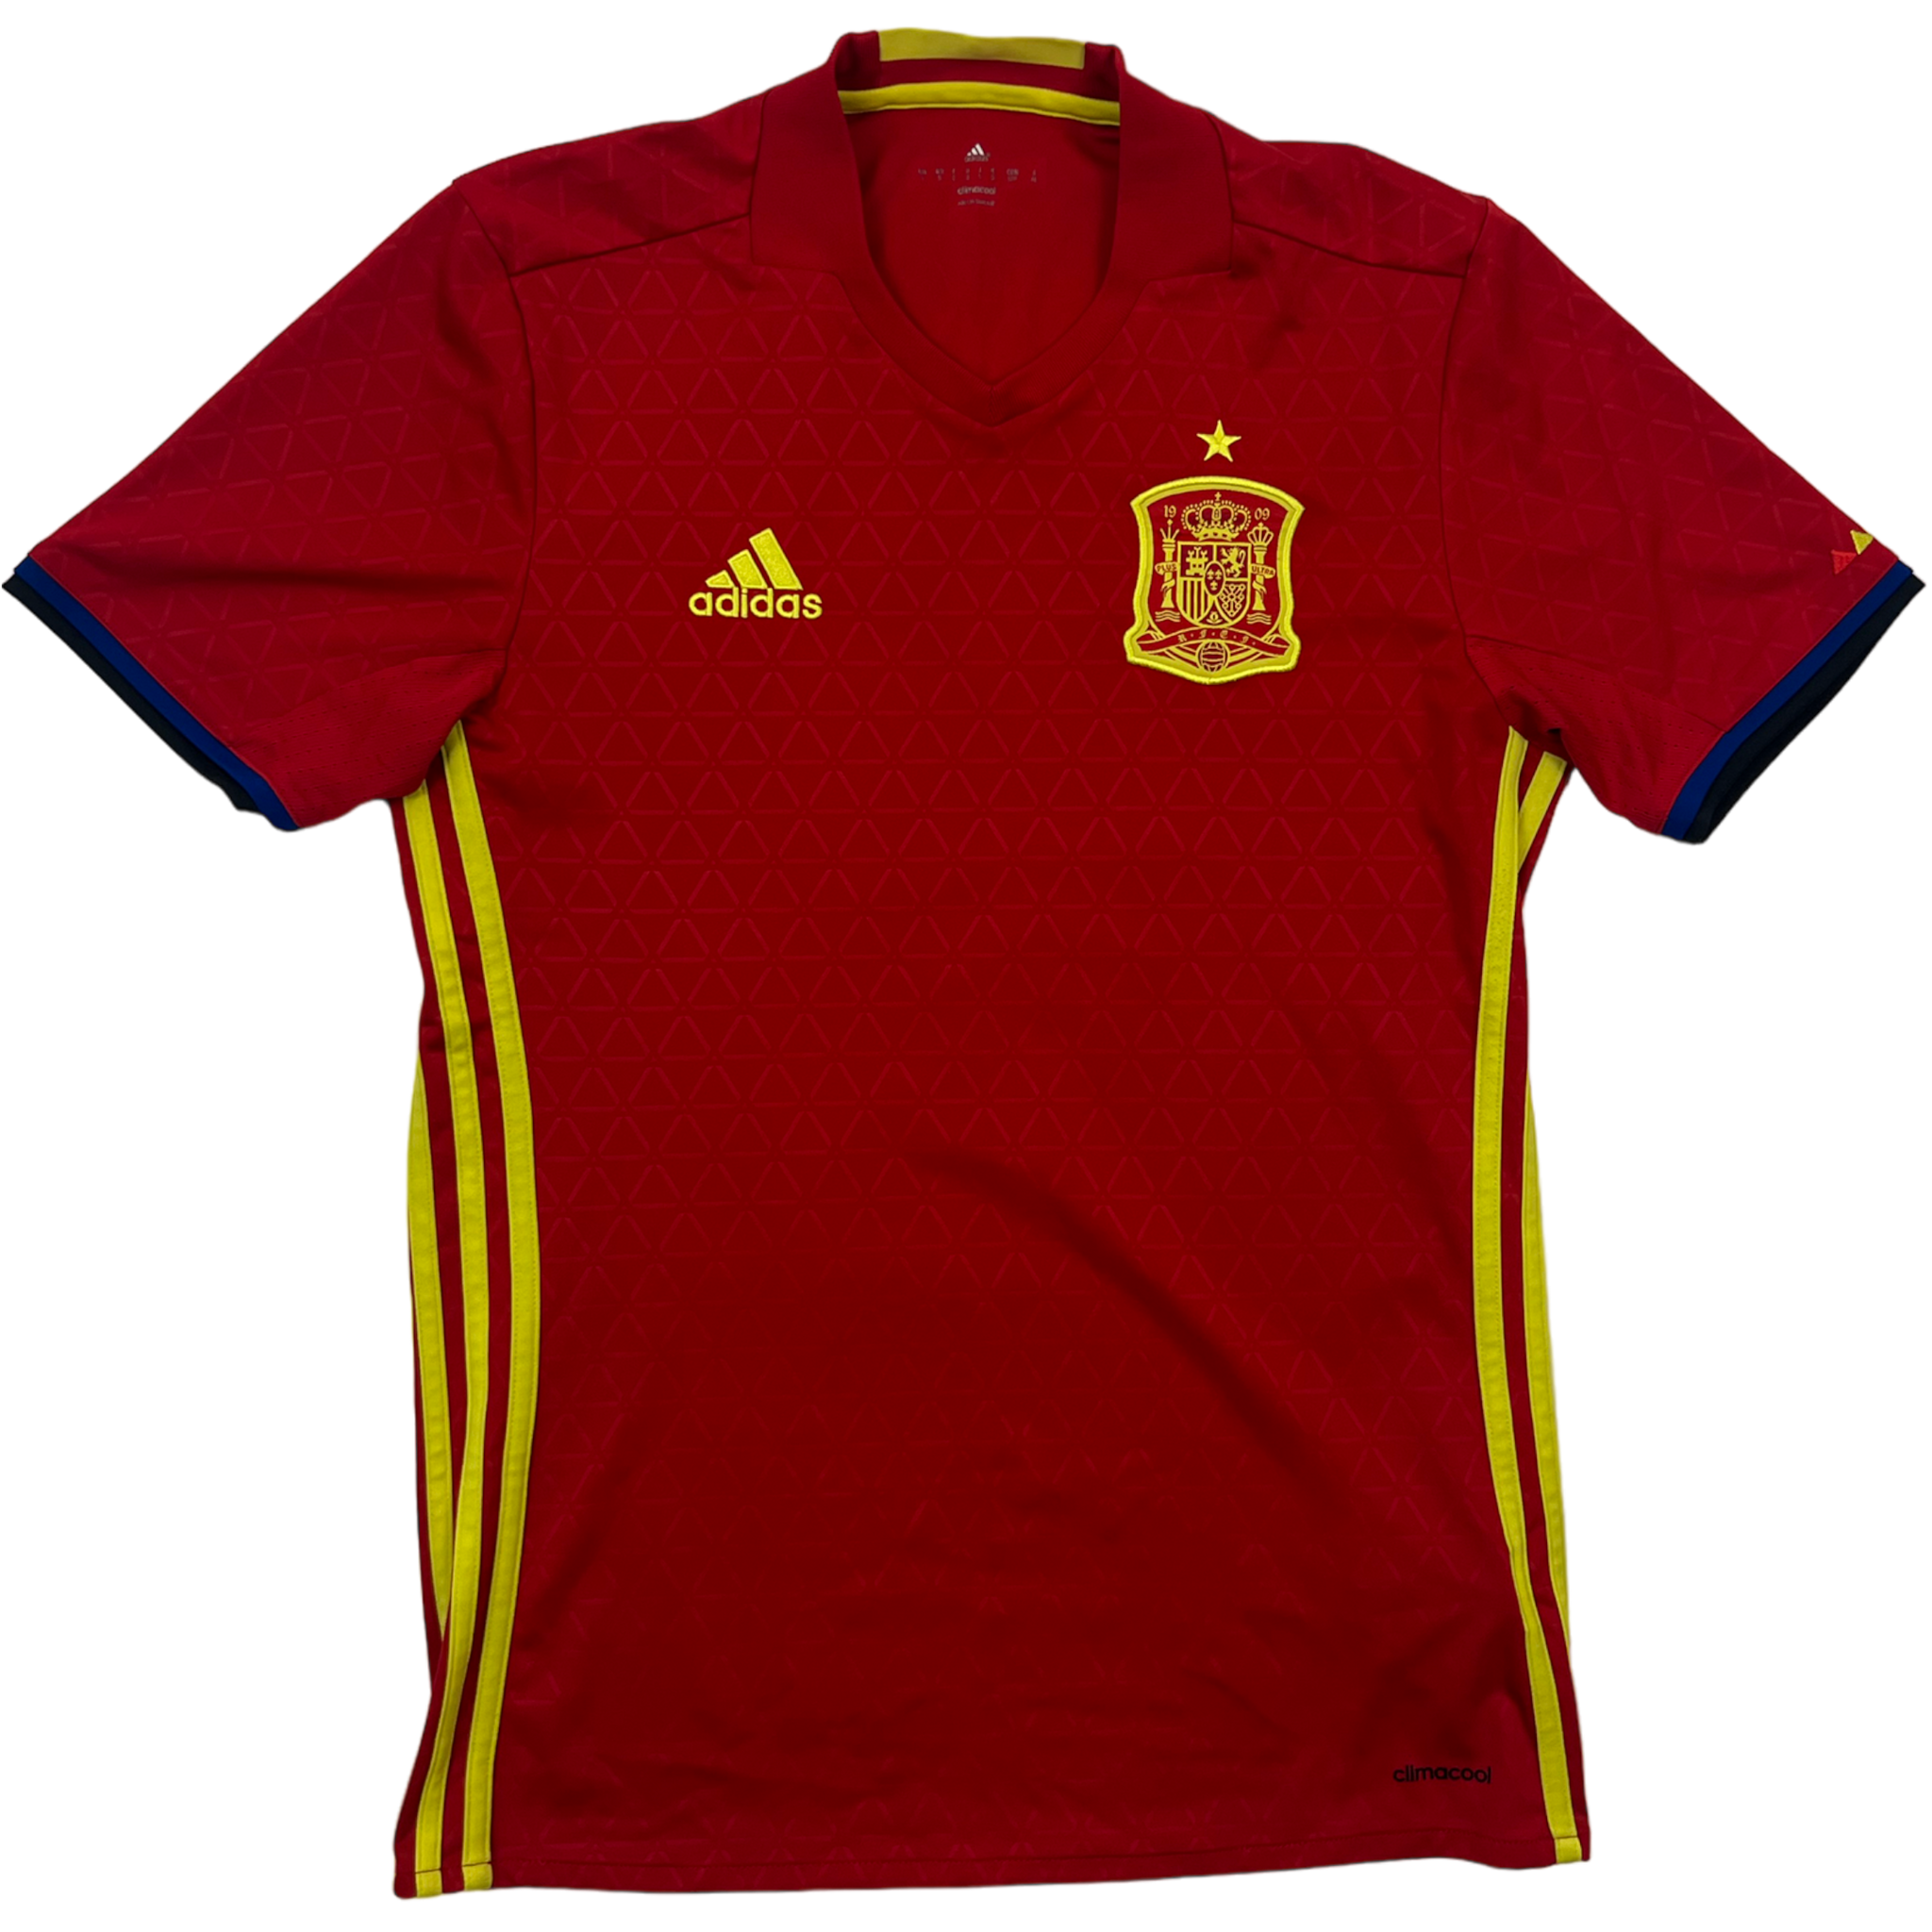 Adidas Spain Jersey (S)